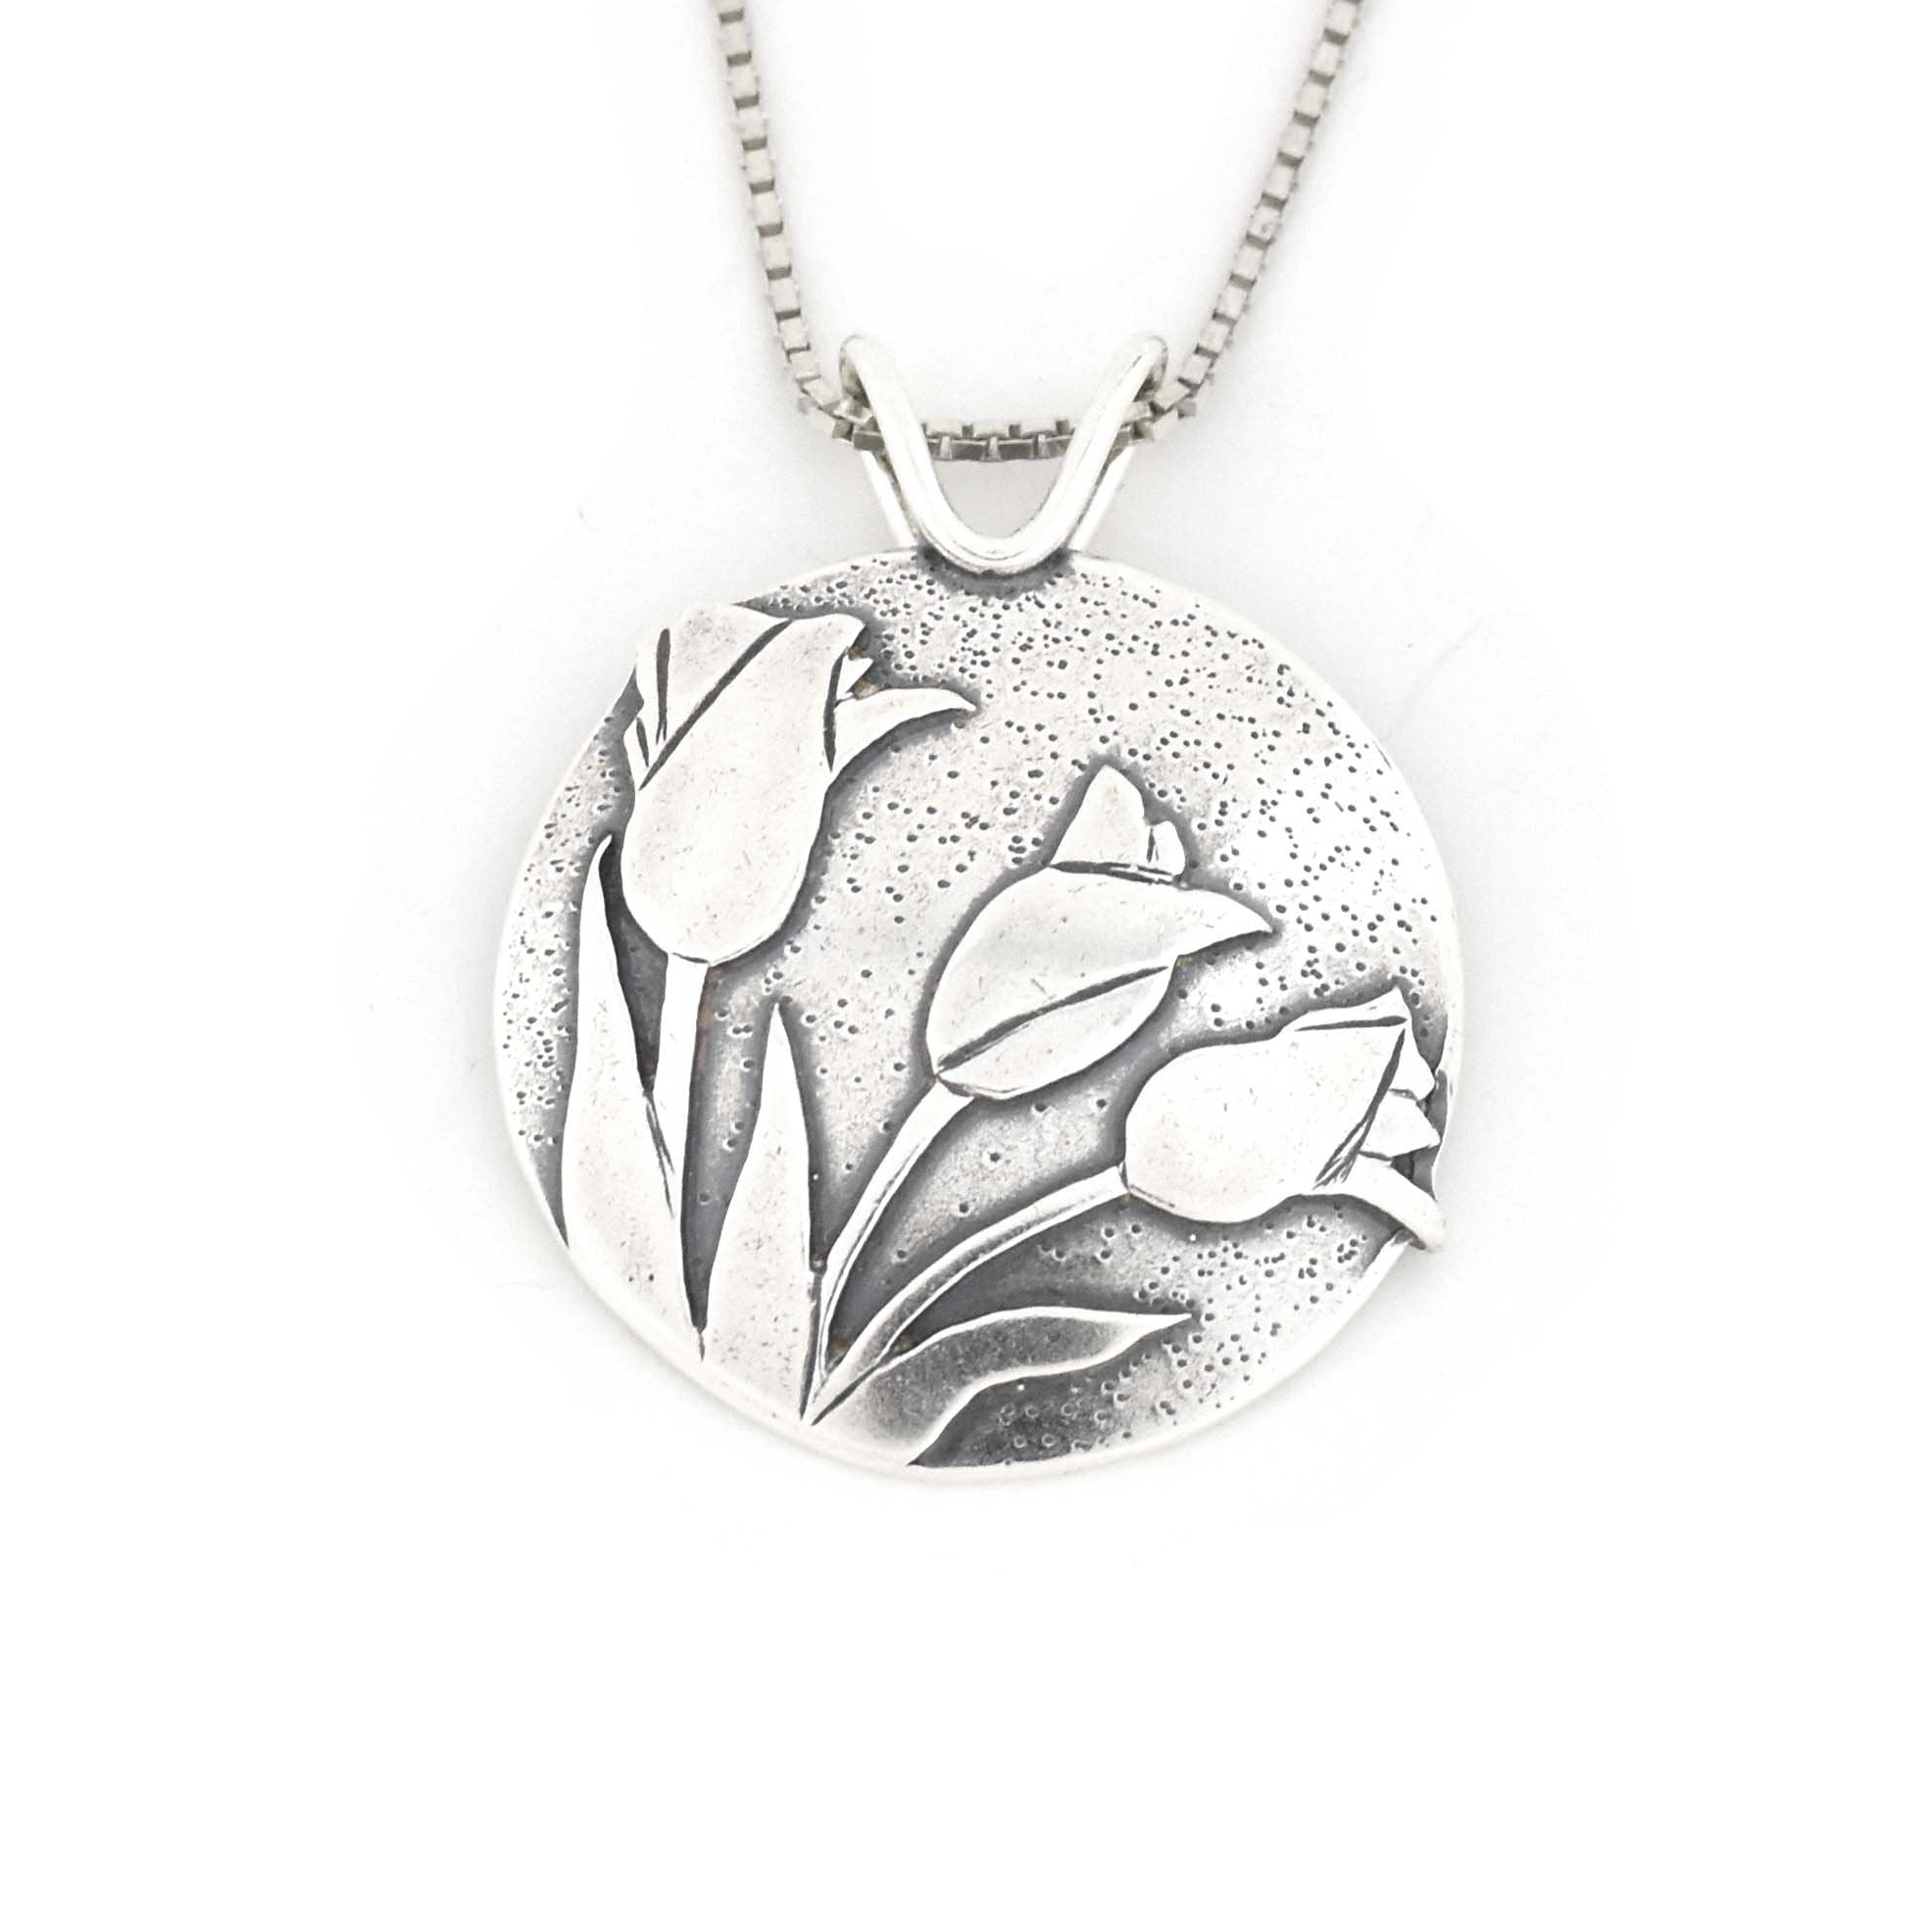 Spring Tulip Pendant - Silver Pendant   5488 - handmade by Beth Millner Jewelry